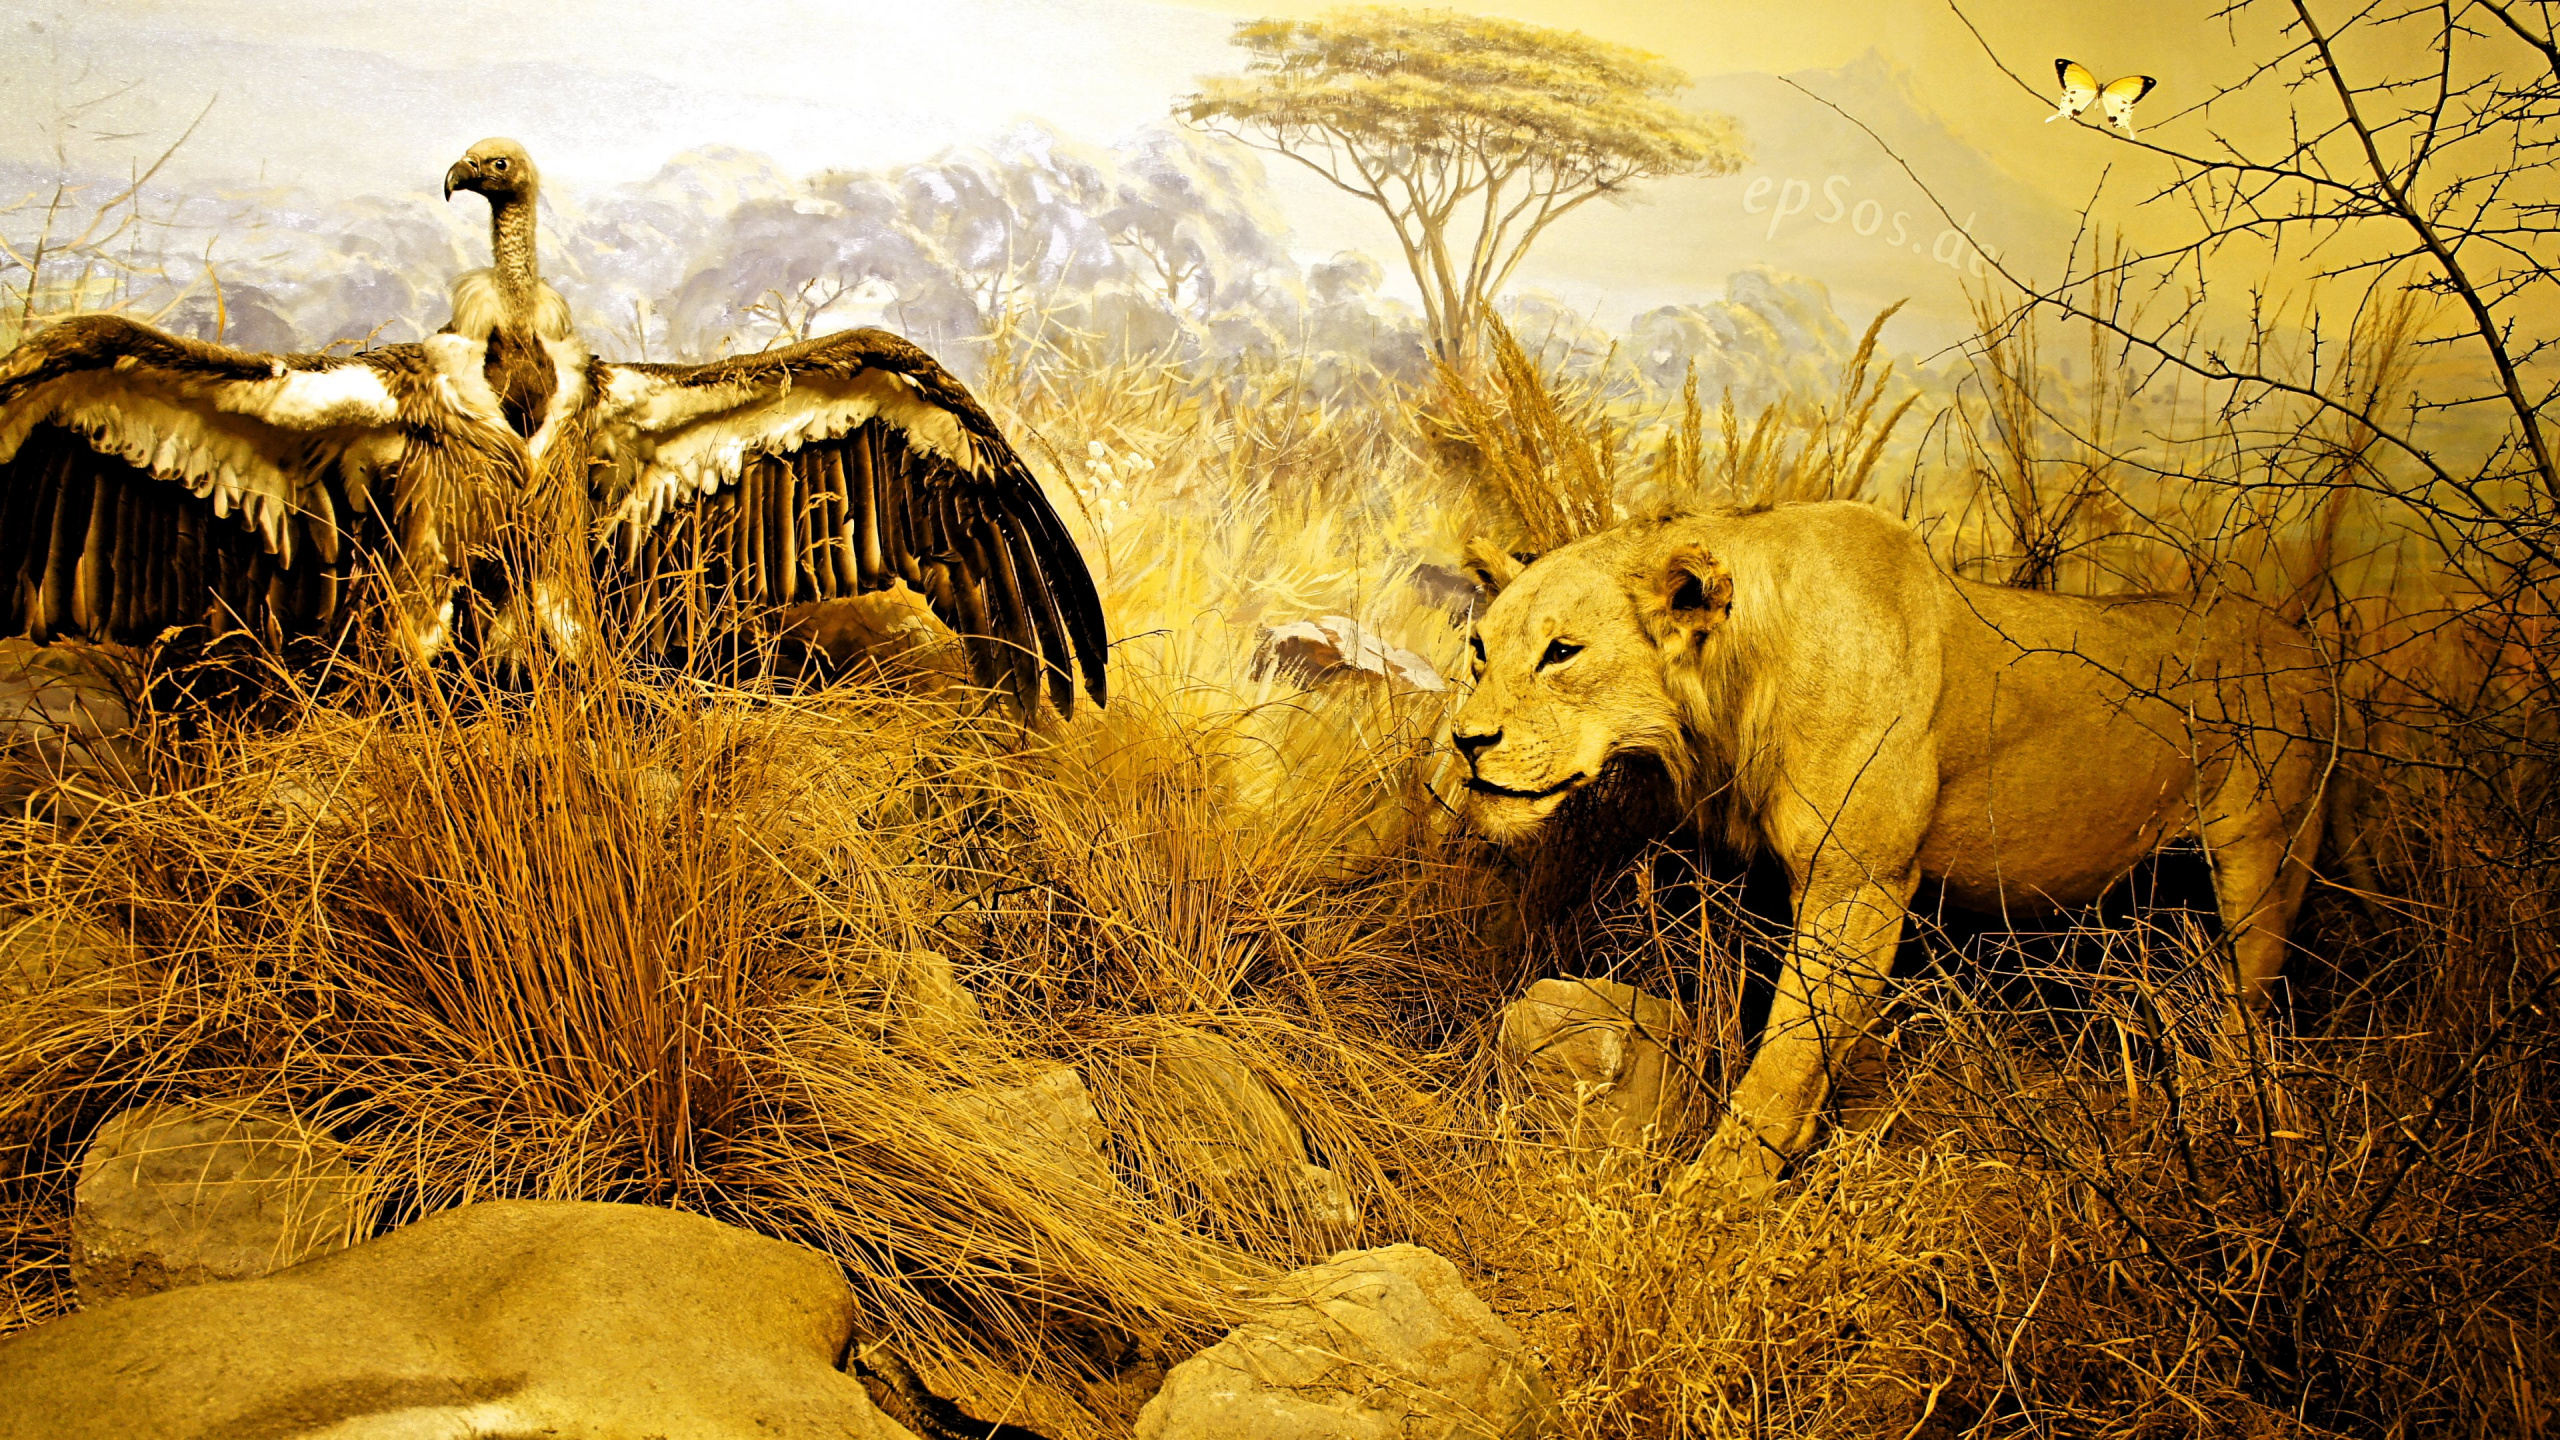 Brown Lion on Brown Grass Field During Daytime. Wallpaper in 2560x1440 Resolution